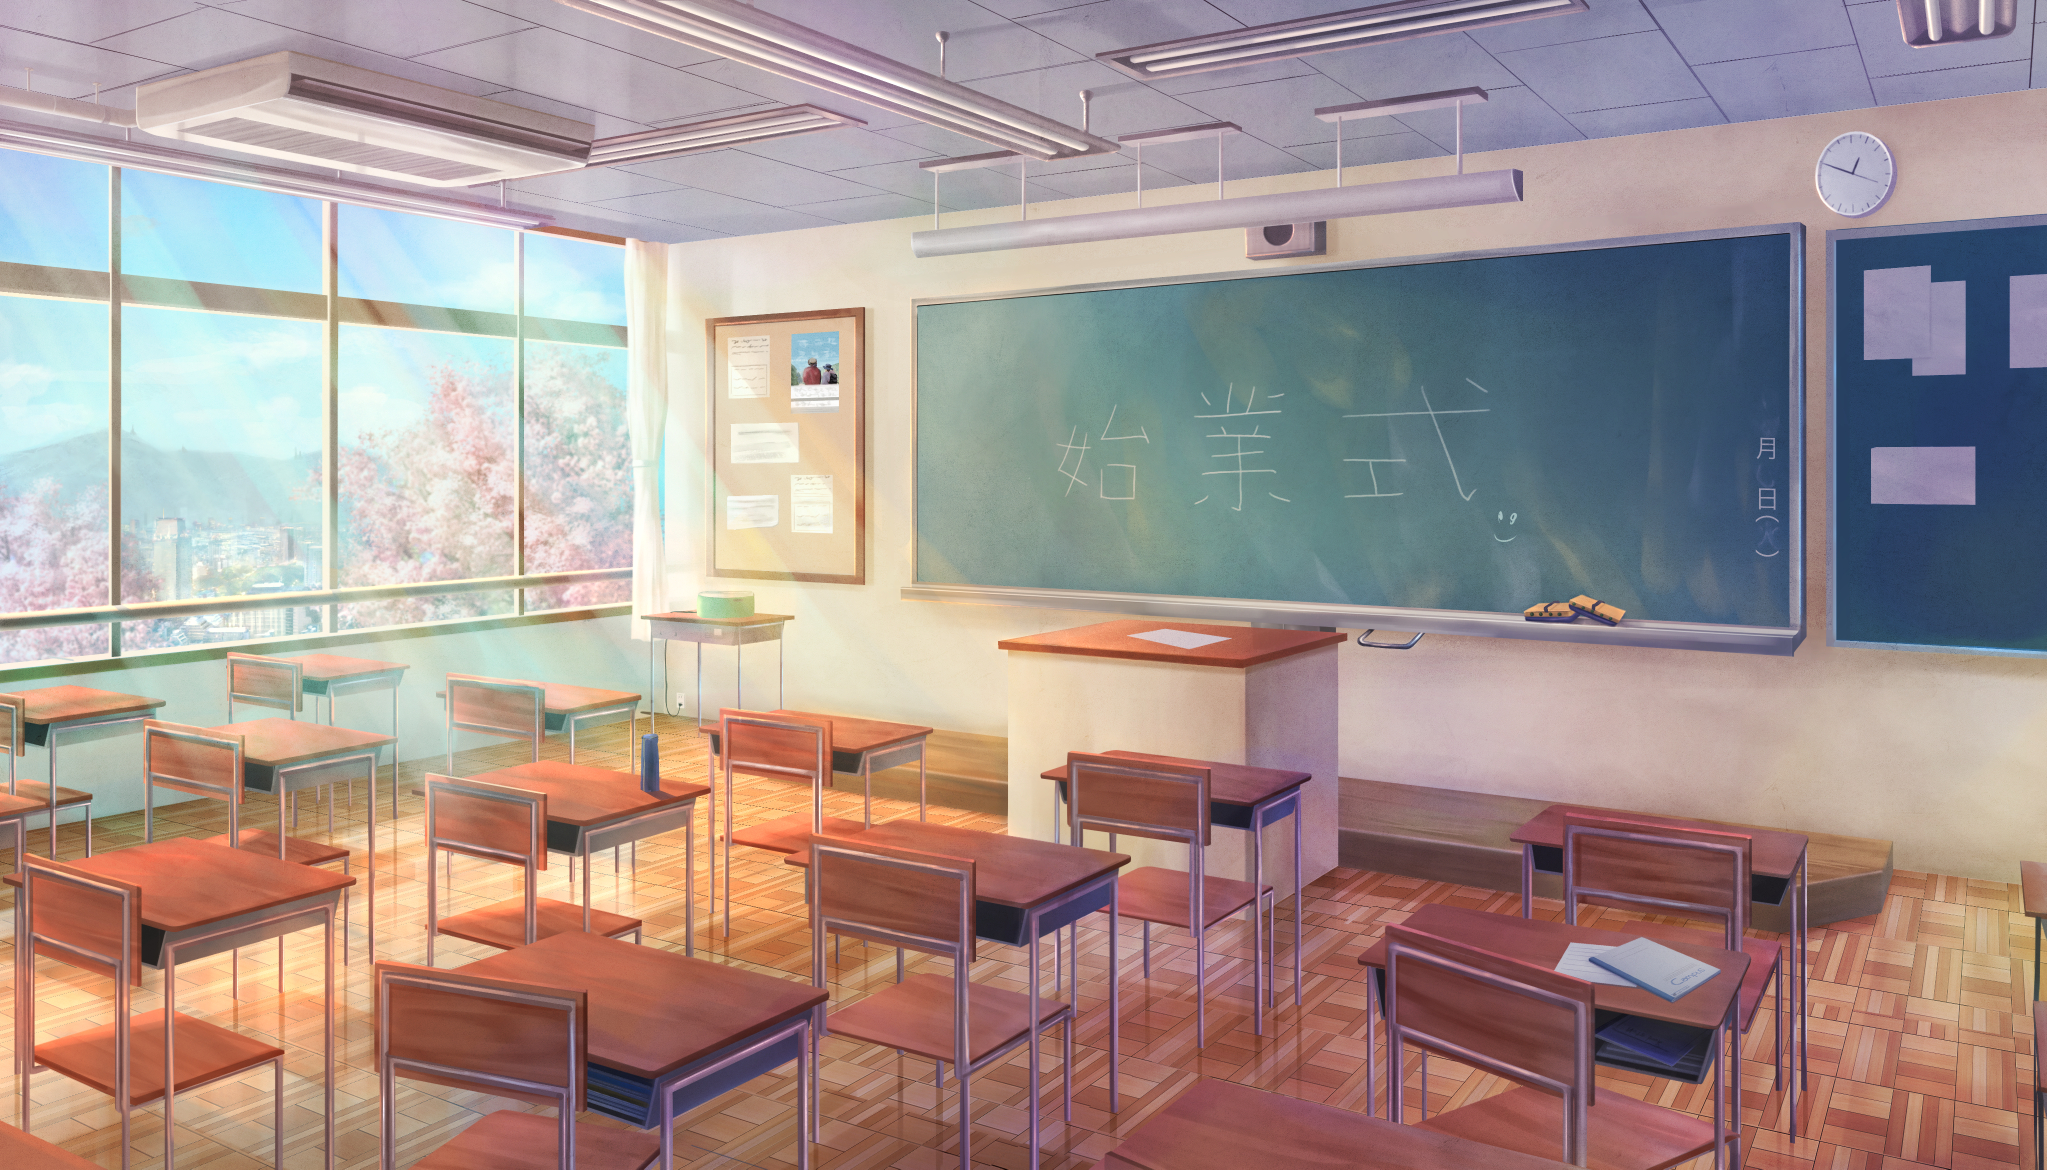 Anime Room HD Wallpaper by タミっ子